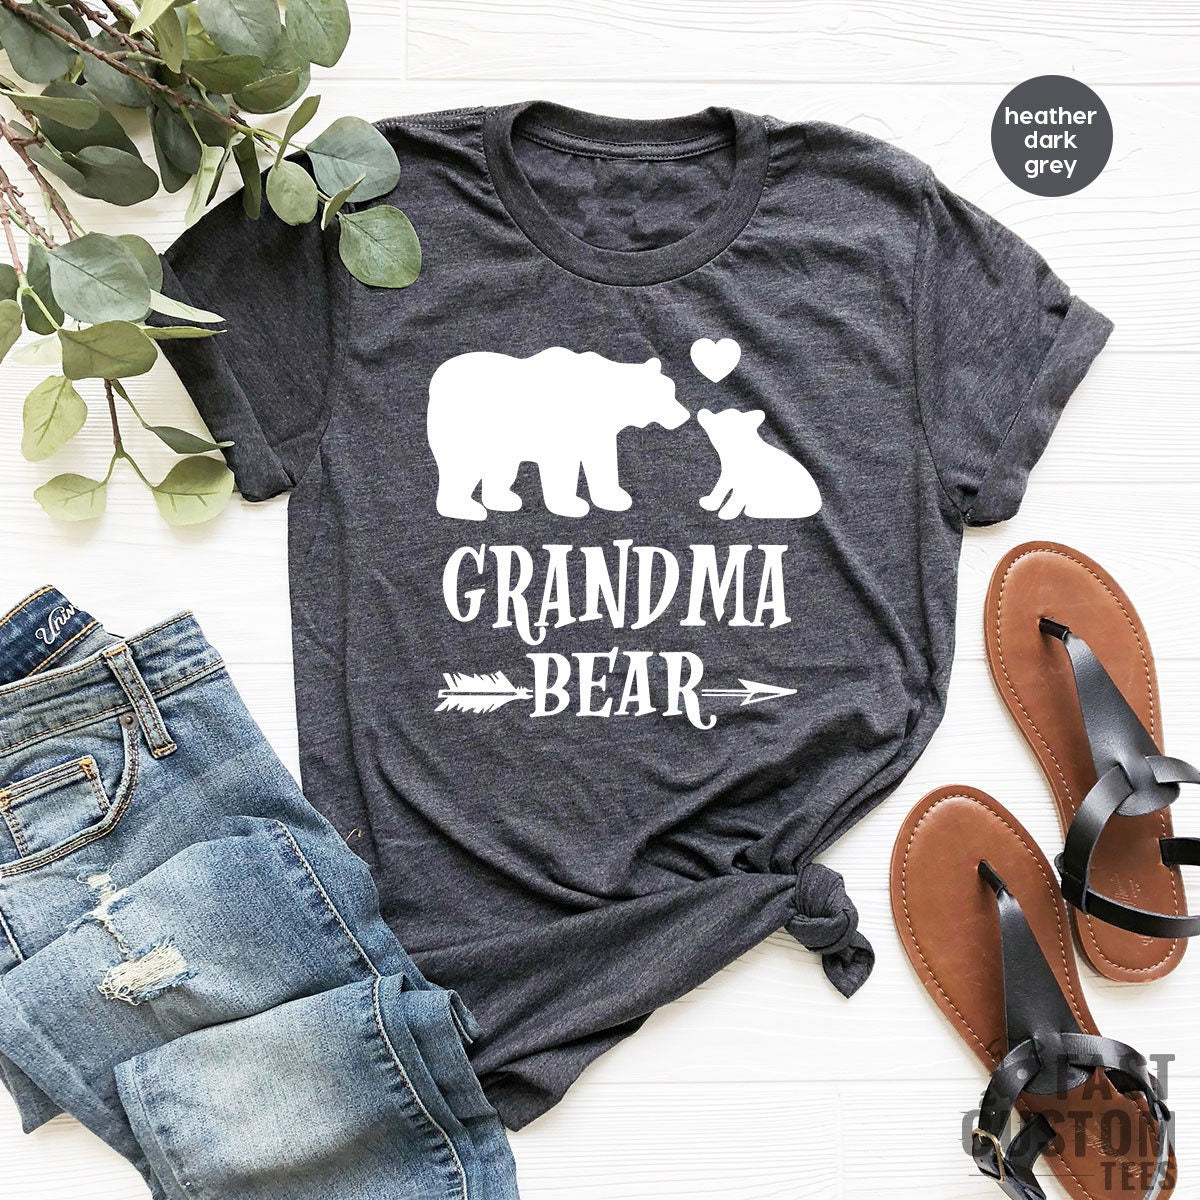 Nana T Shirt, Grandma Bear Shirt, Gift For Grandma, Mothers Day T Shirt, Bear Family Shirt, Grandma Shirt, Gigi Shirt, Grandmother Shirt - Fastdeliverytees.com